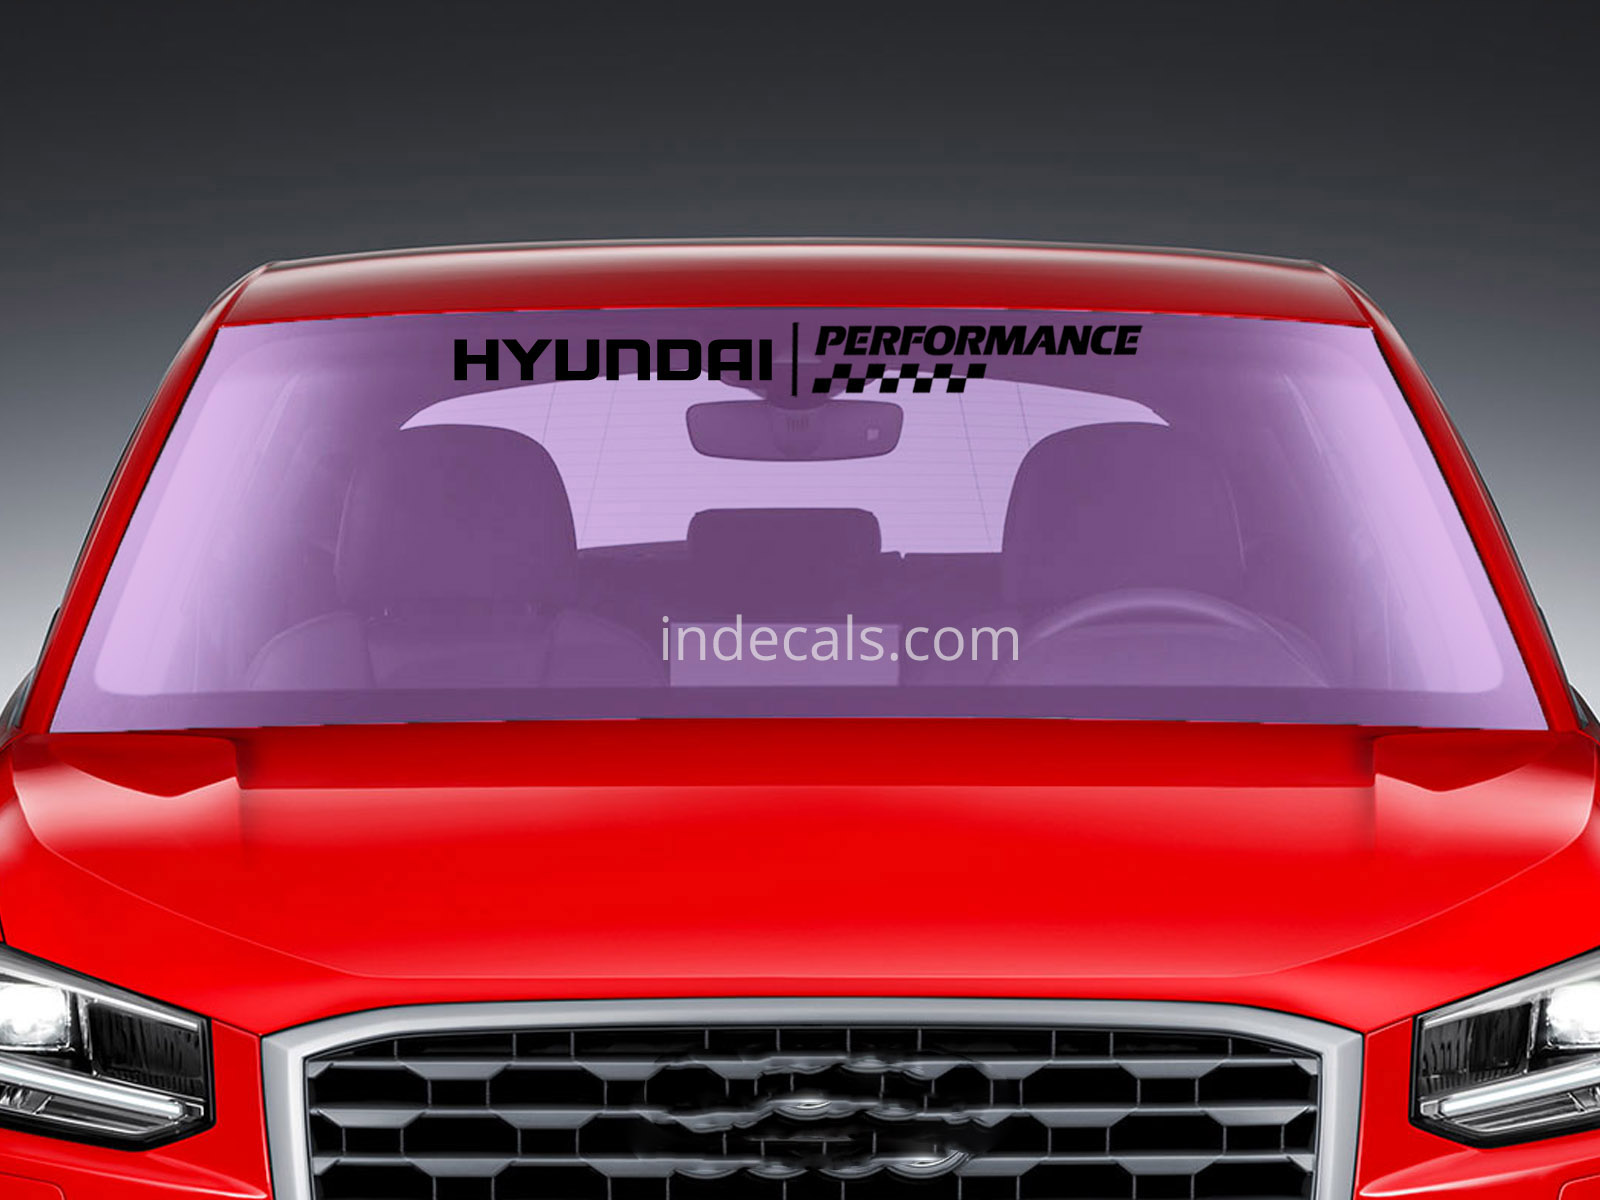 1 x Hyundai Performance Sticker for Windshield or Back Window - Black 